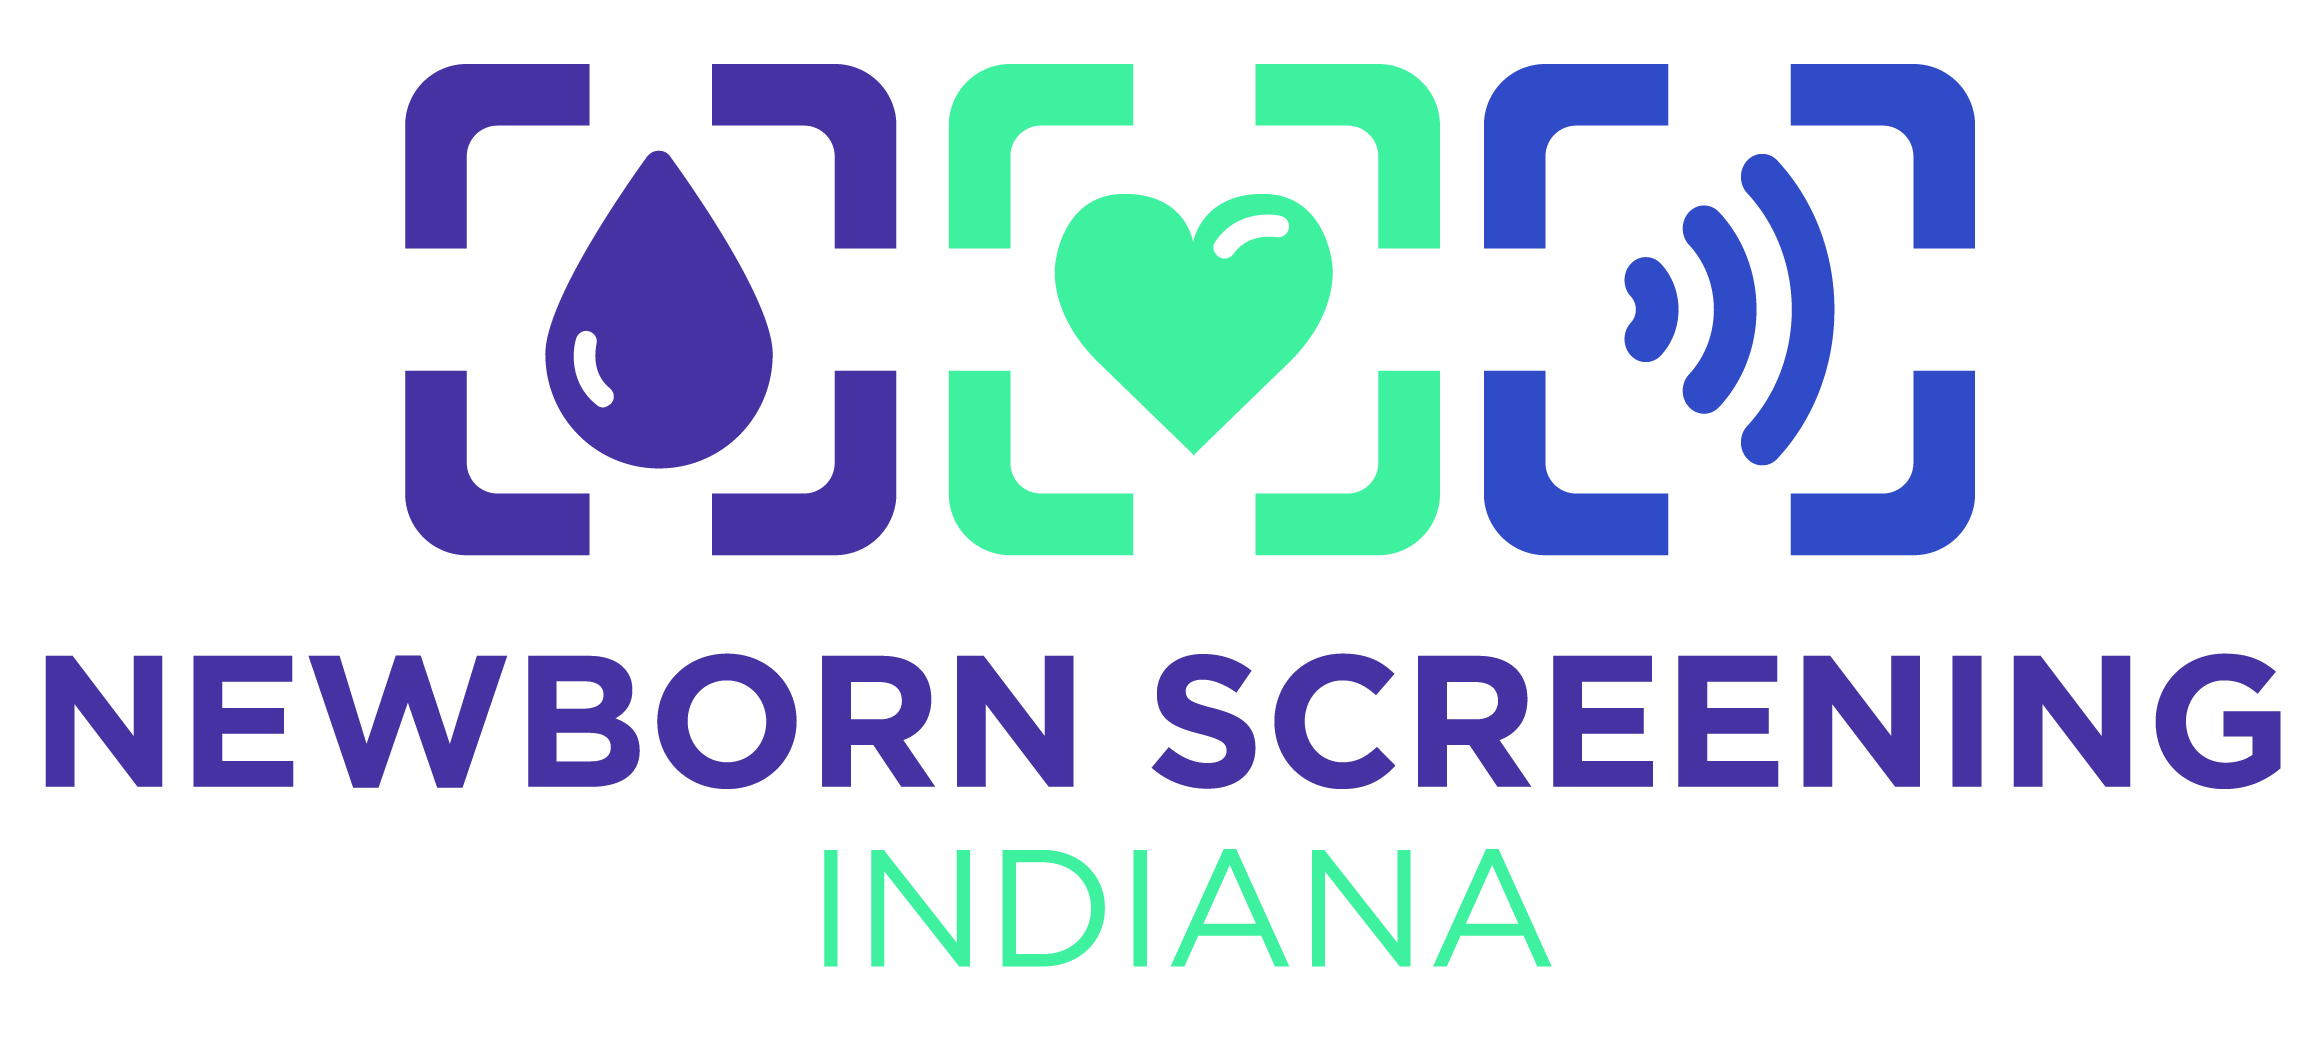 Newborn Screening Indiana Logo